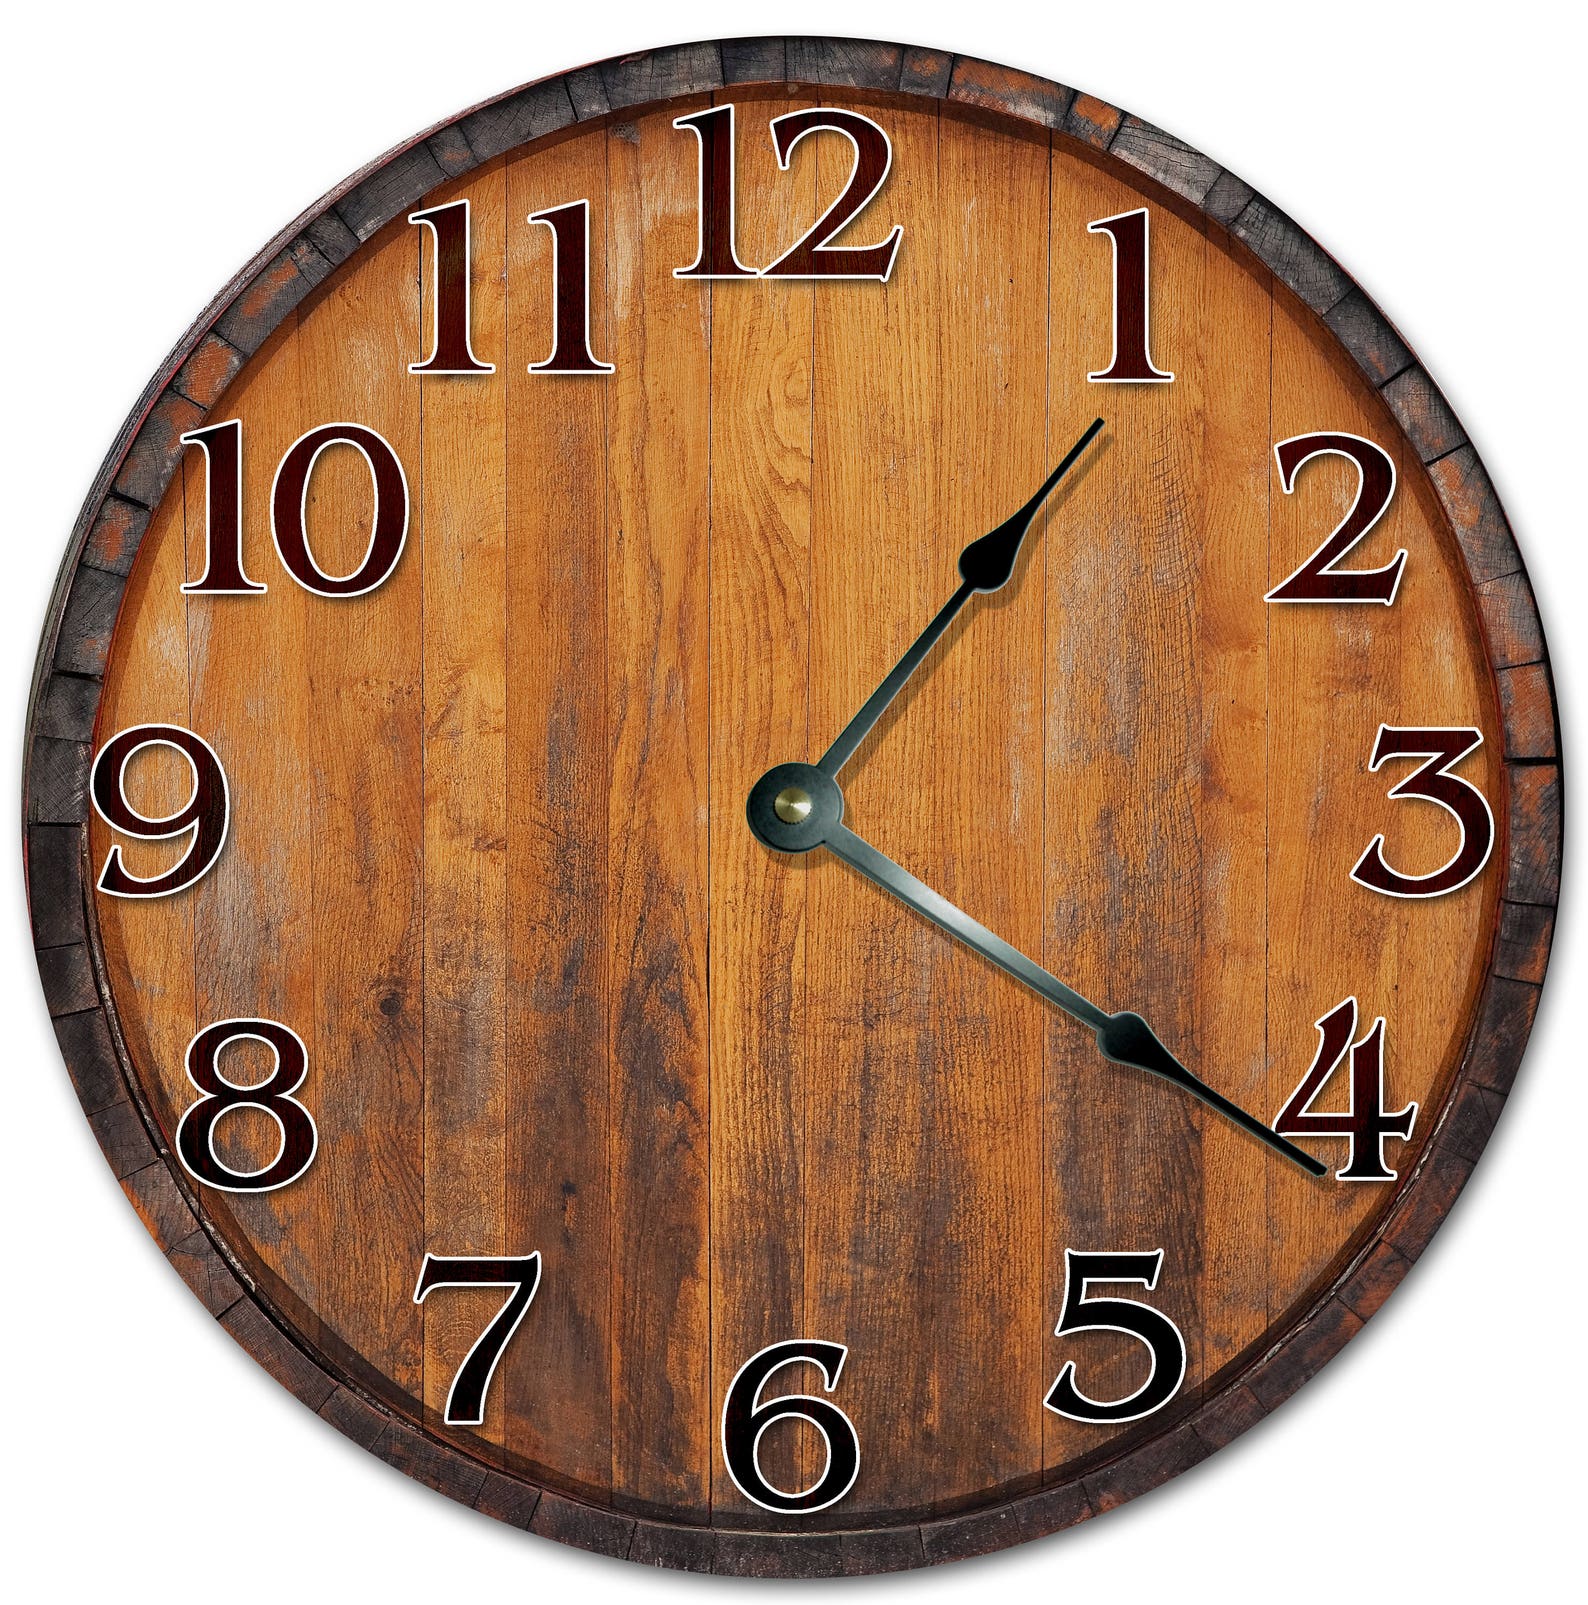 Часы 12 51. Часы бочка женские. Циферблат бочка у часов. Часы бочка мужские. Часы деревянные зеленые цифры.